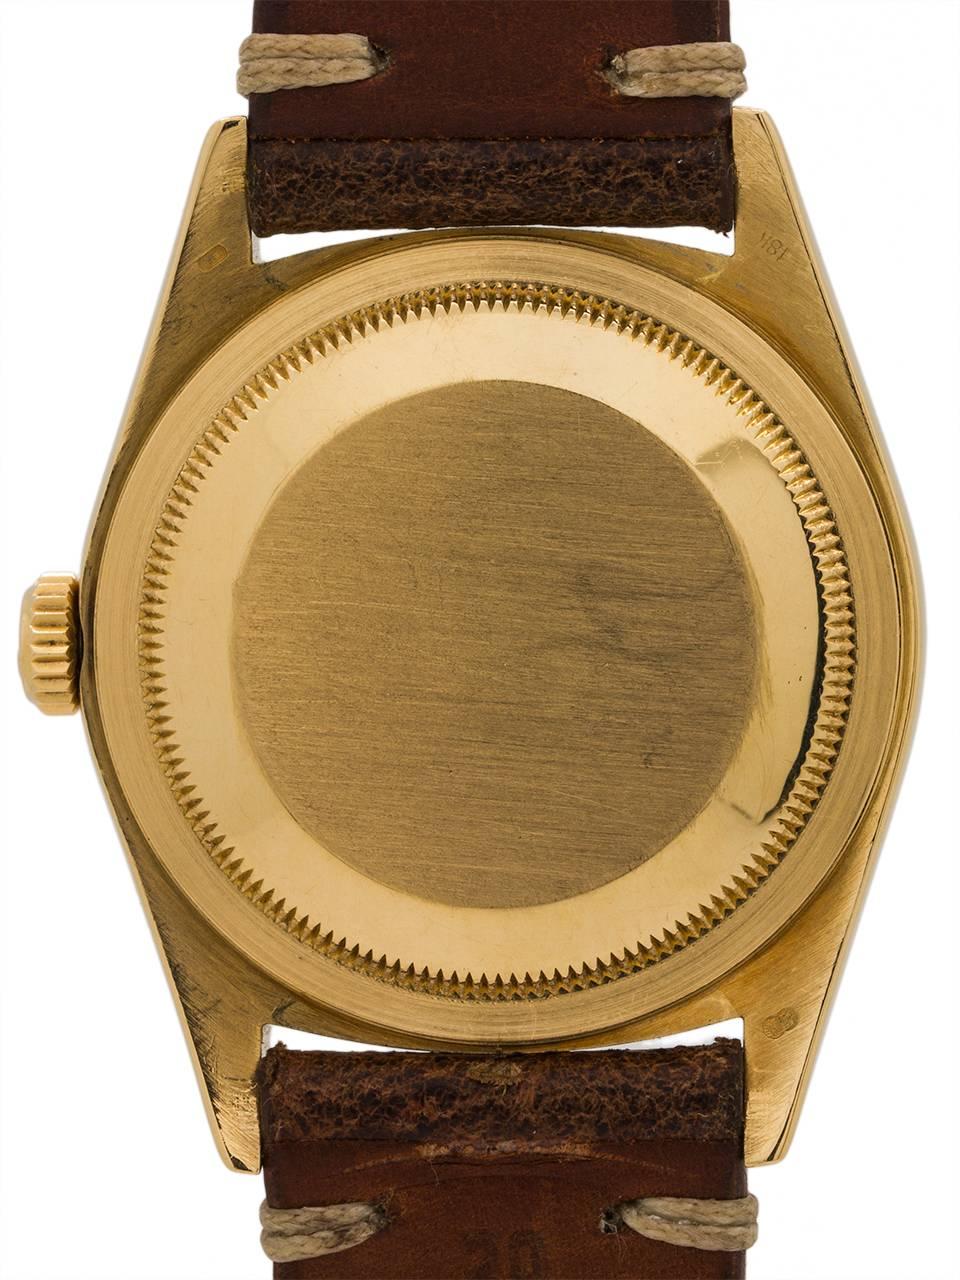 Men's Rolex Yellow Gold President Day Date Automatic Wristwatch Ref 18038, circa 1990